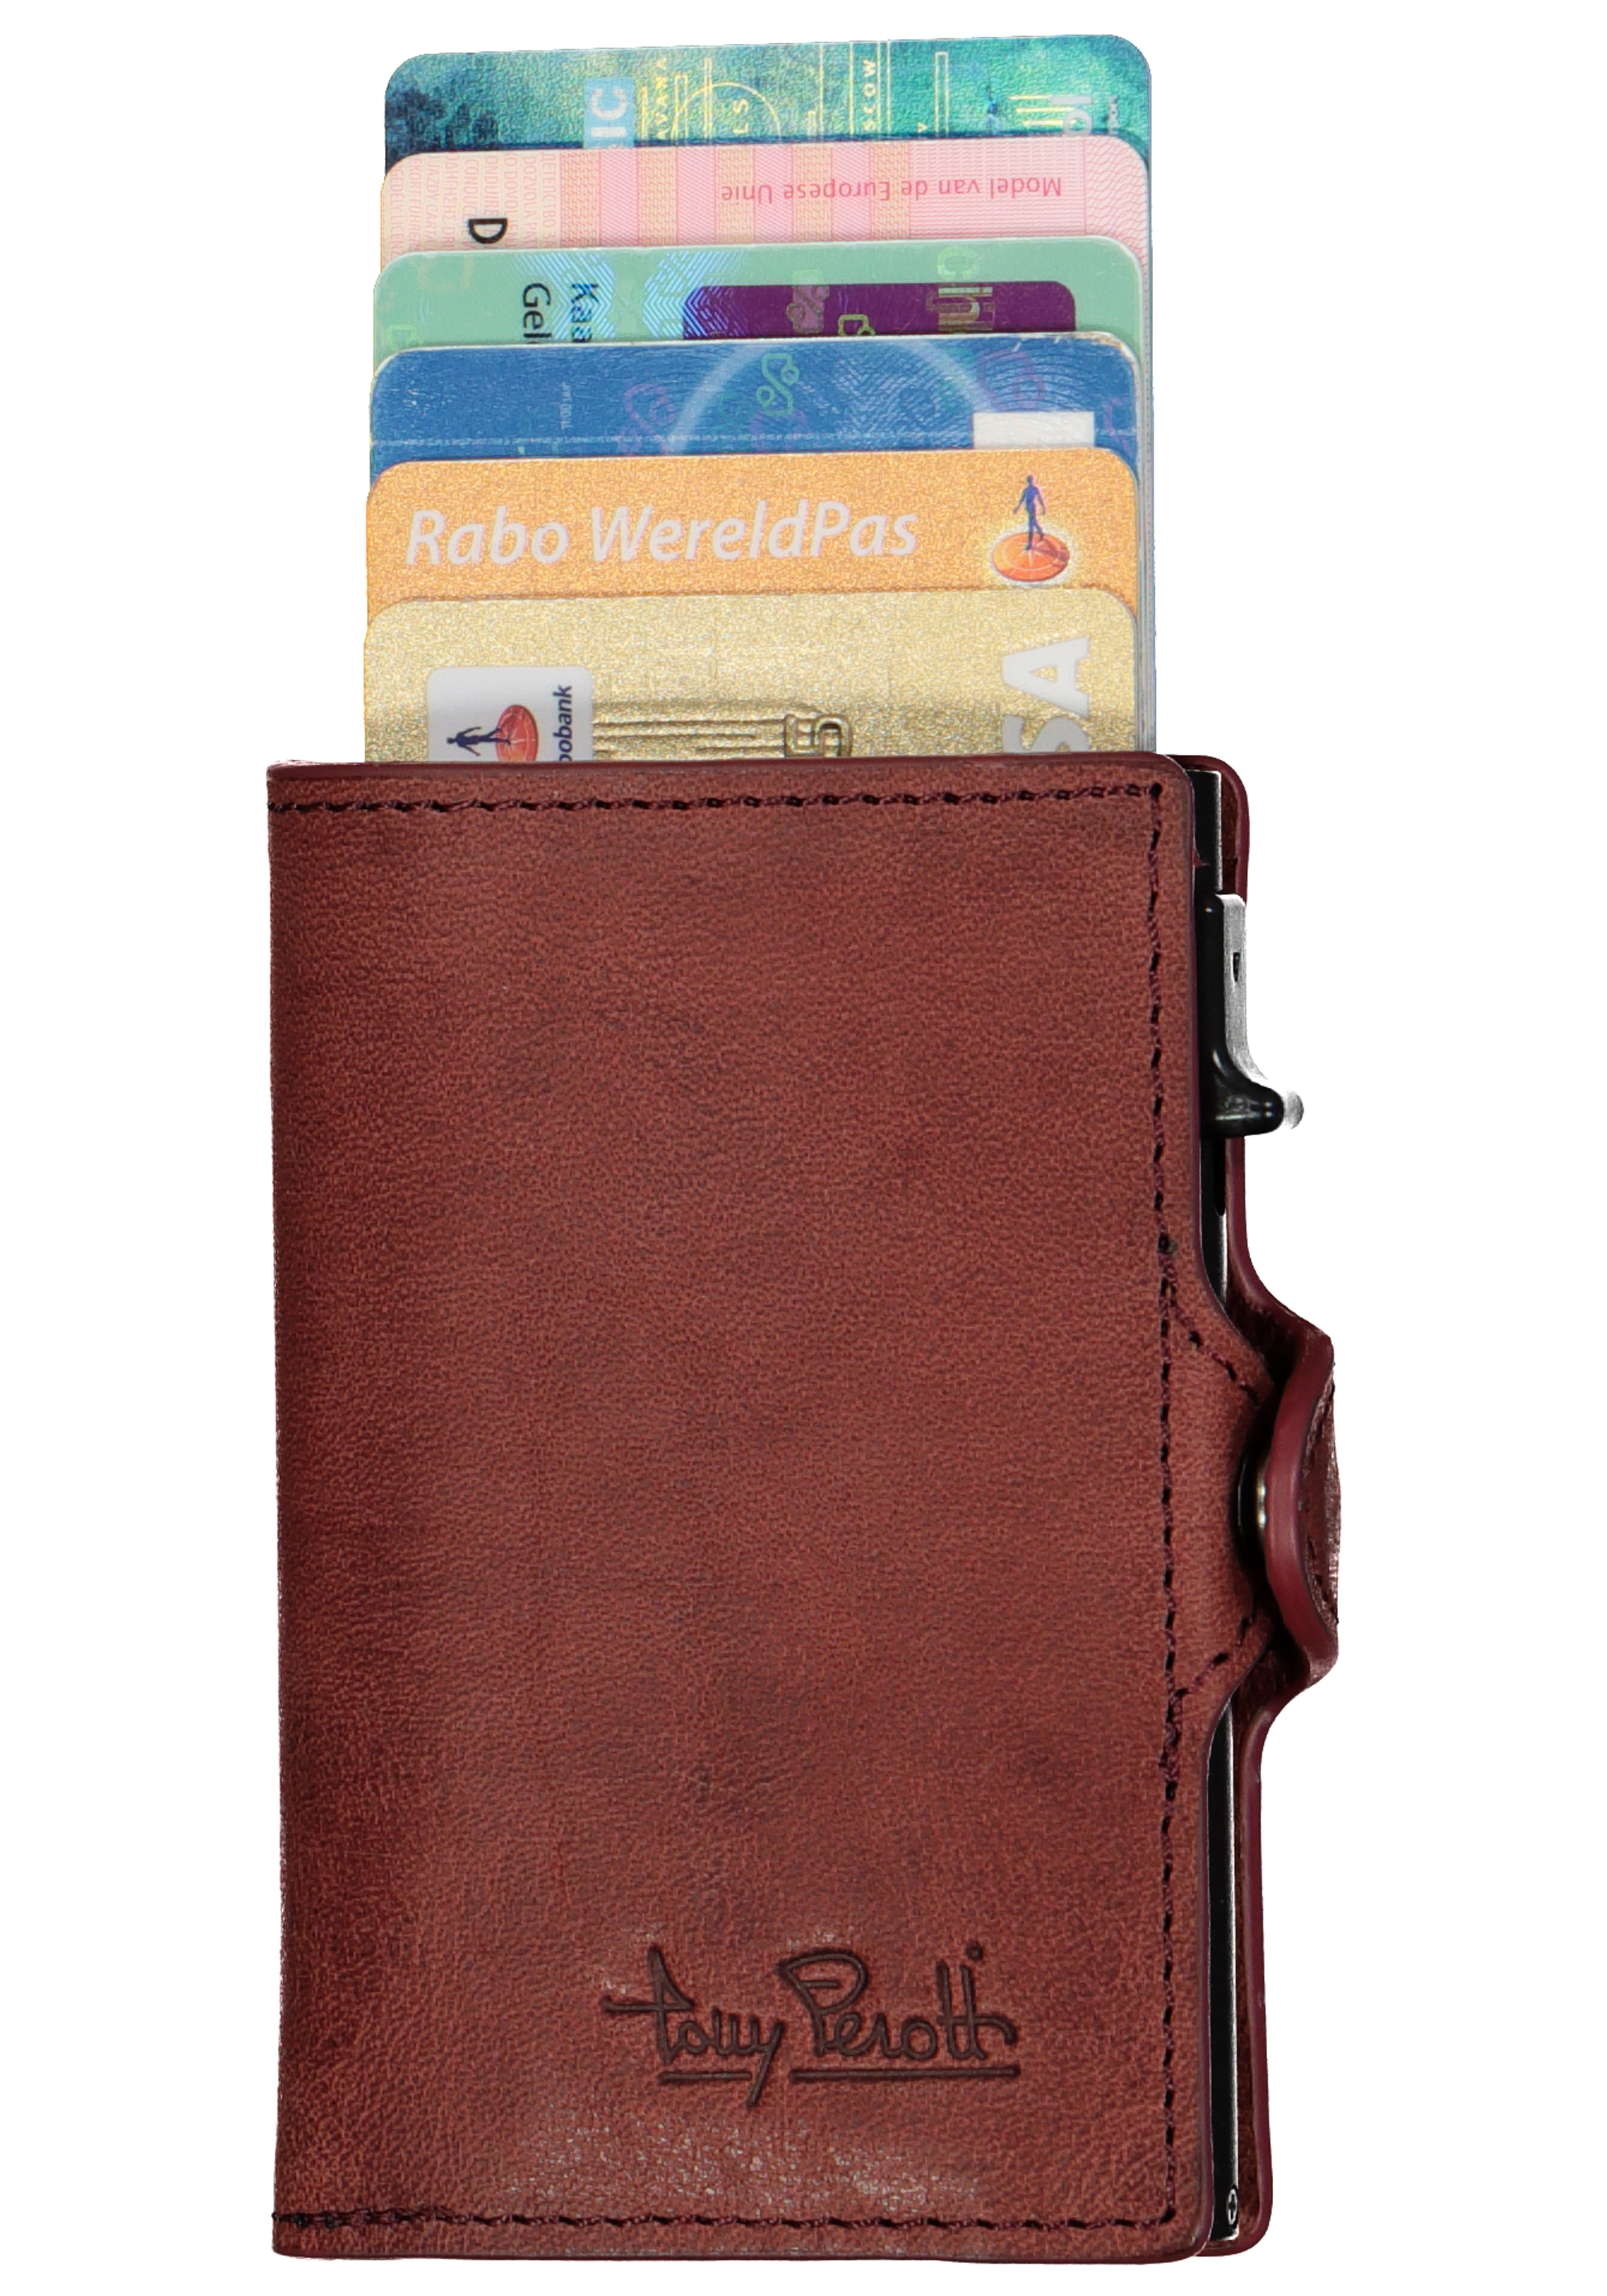 Tony Perotti pasjes RFID portemonnee (6 pasjes) papiergeldvak,... - SALE tot 50% korting - Gratis verzending en retour